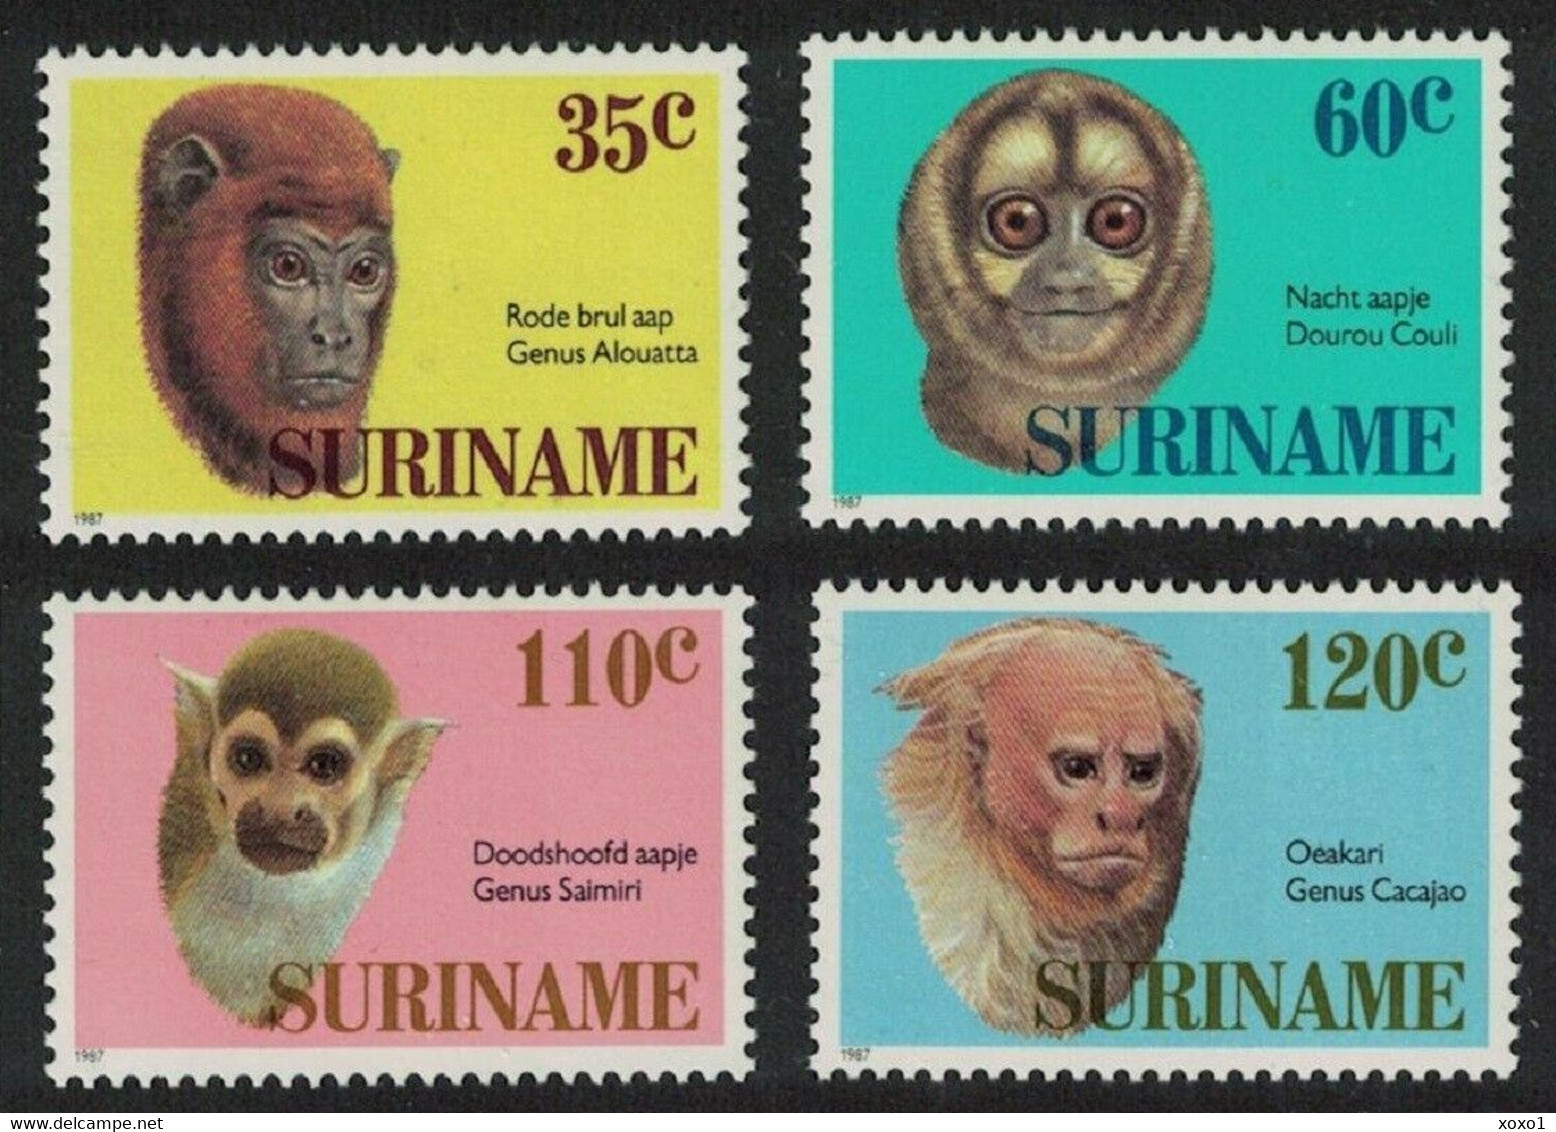 Suriname 1987 MiNr. 1194 - 1197  Surinam Mammals Monkey  4v MNH** 6,50 € - Affen